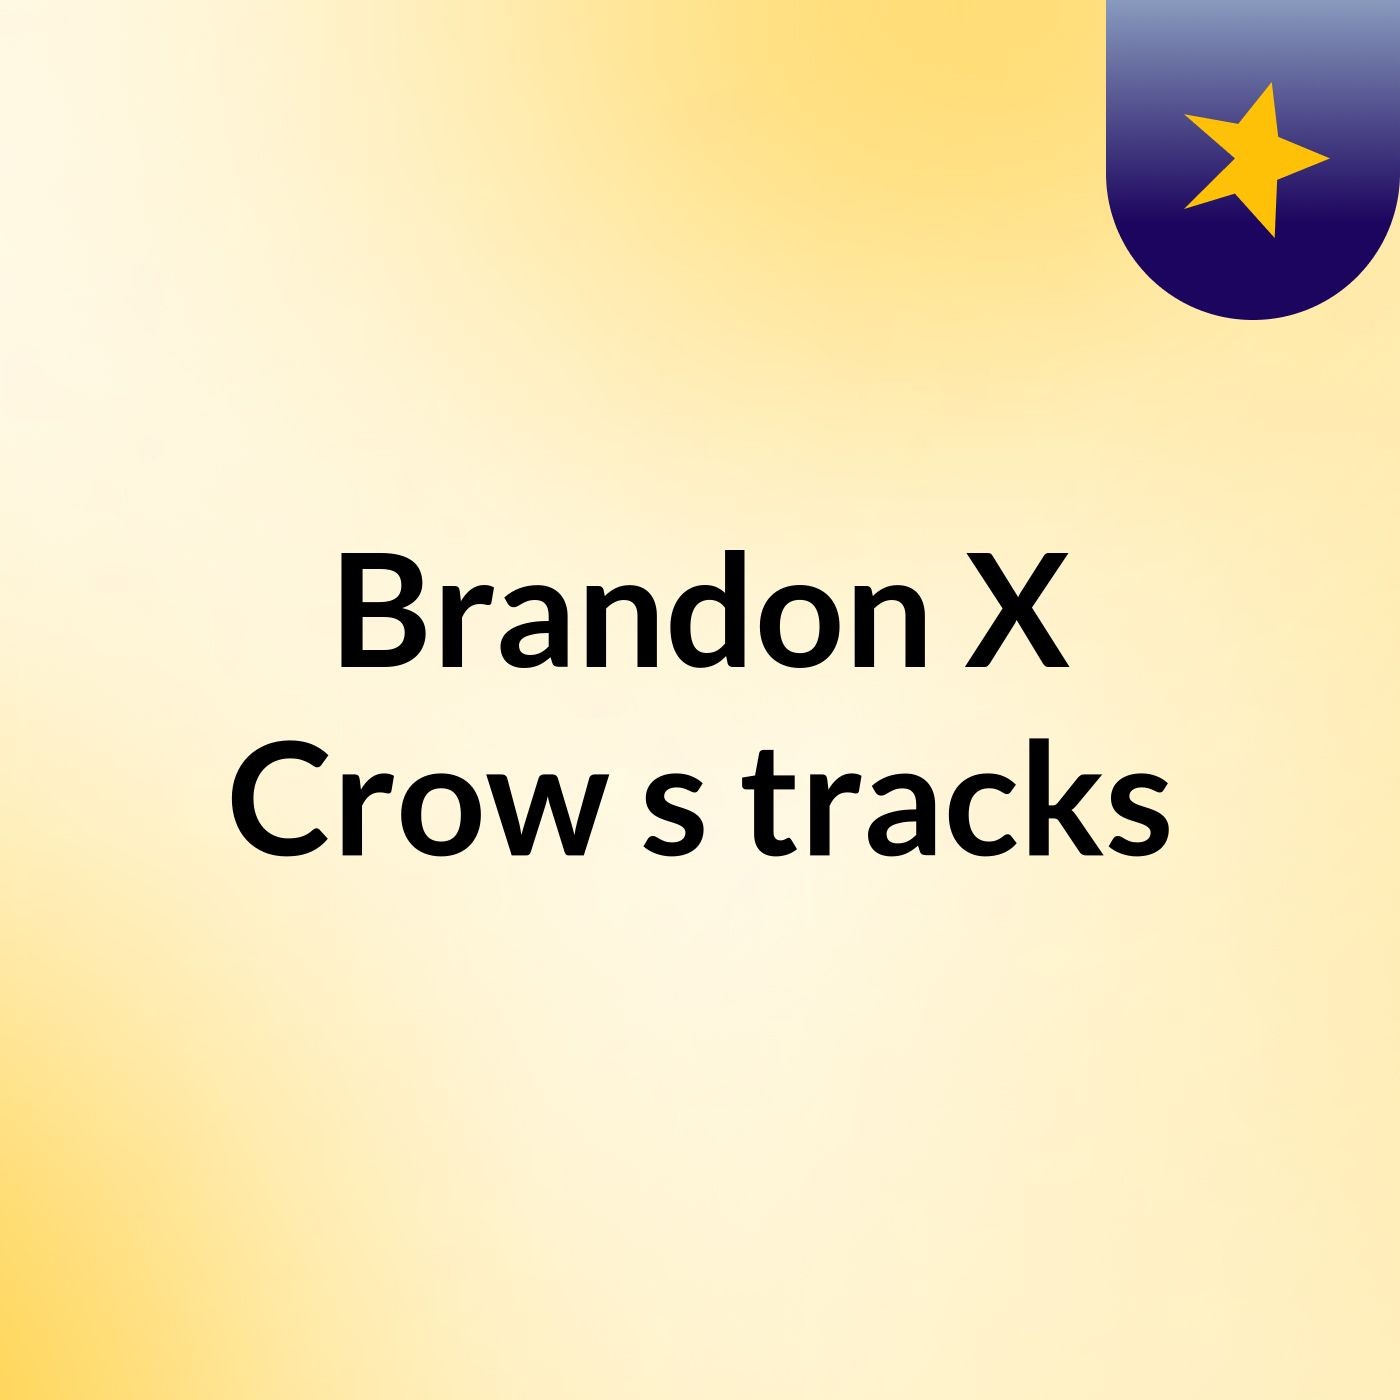 Brandon X Crow's tracks